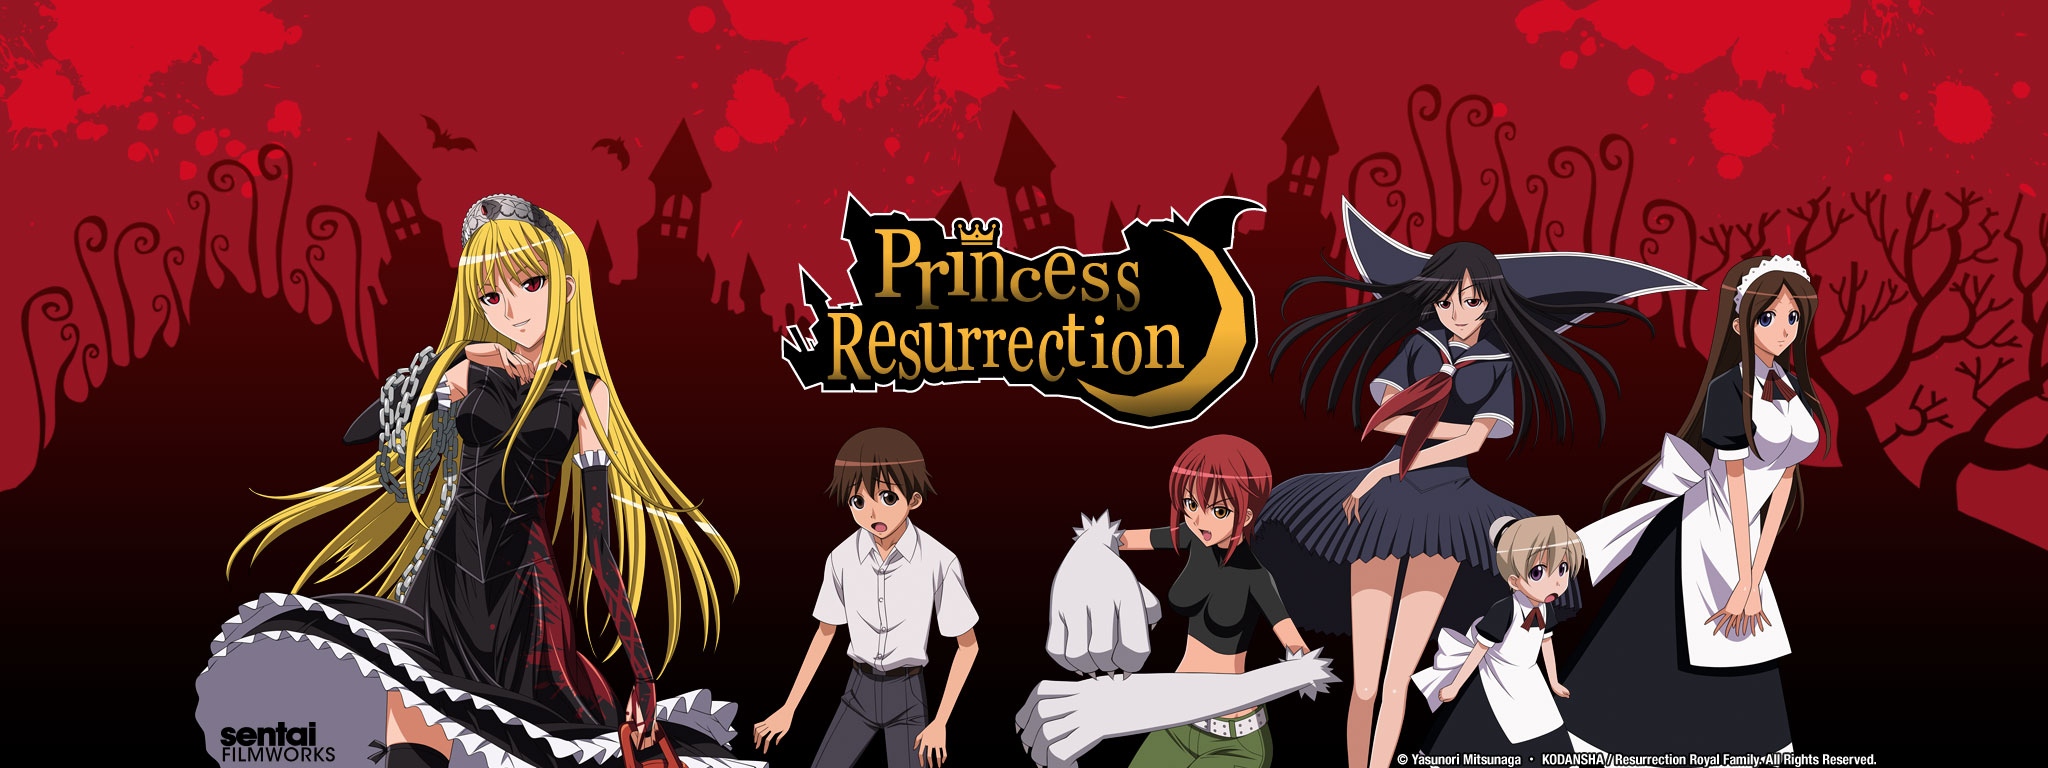 Title Art for Princess Resurrection